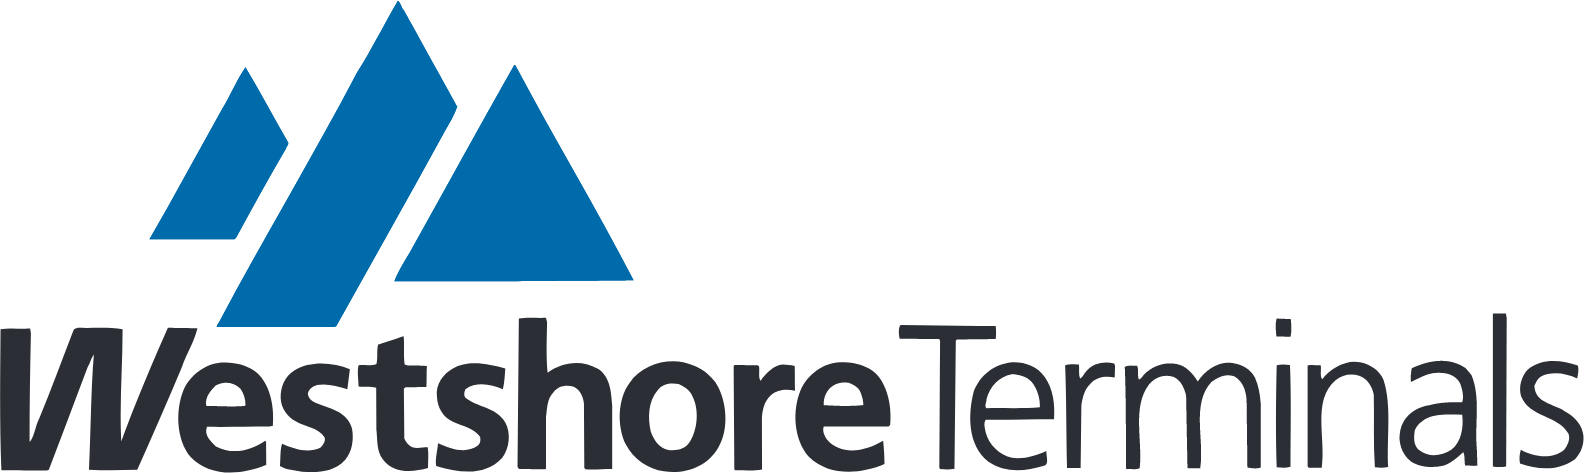 Westshore Terminals Investment logo large (transparent PNG)